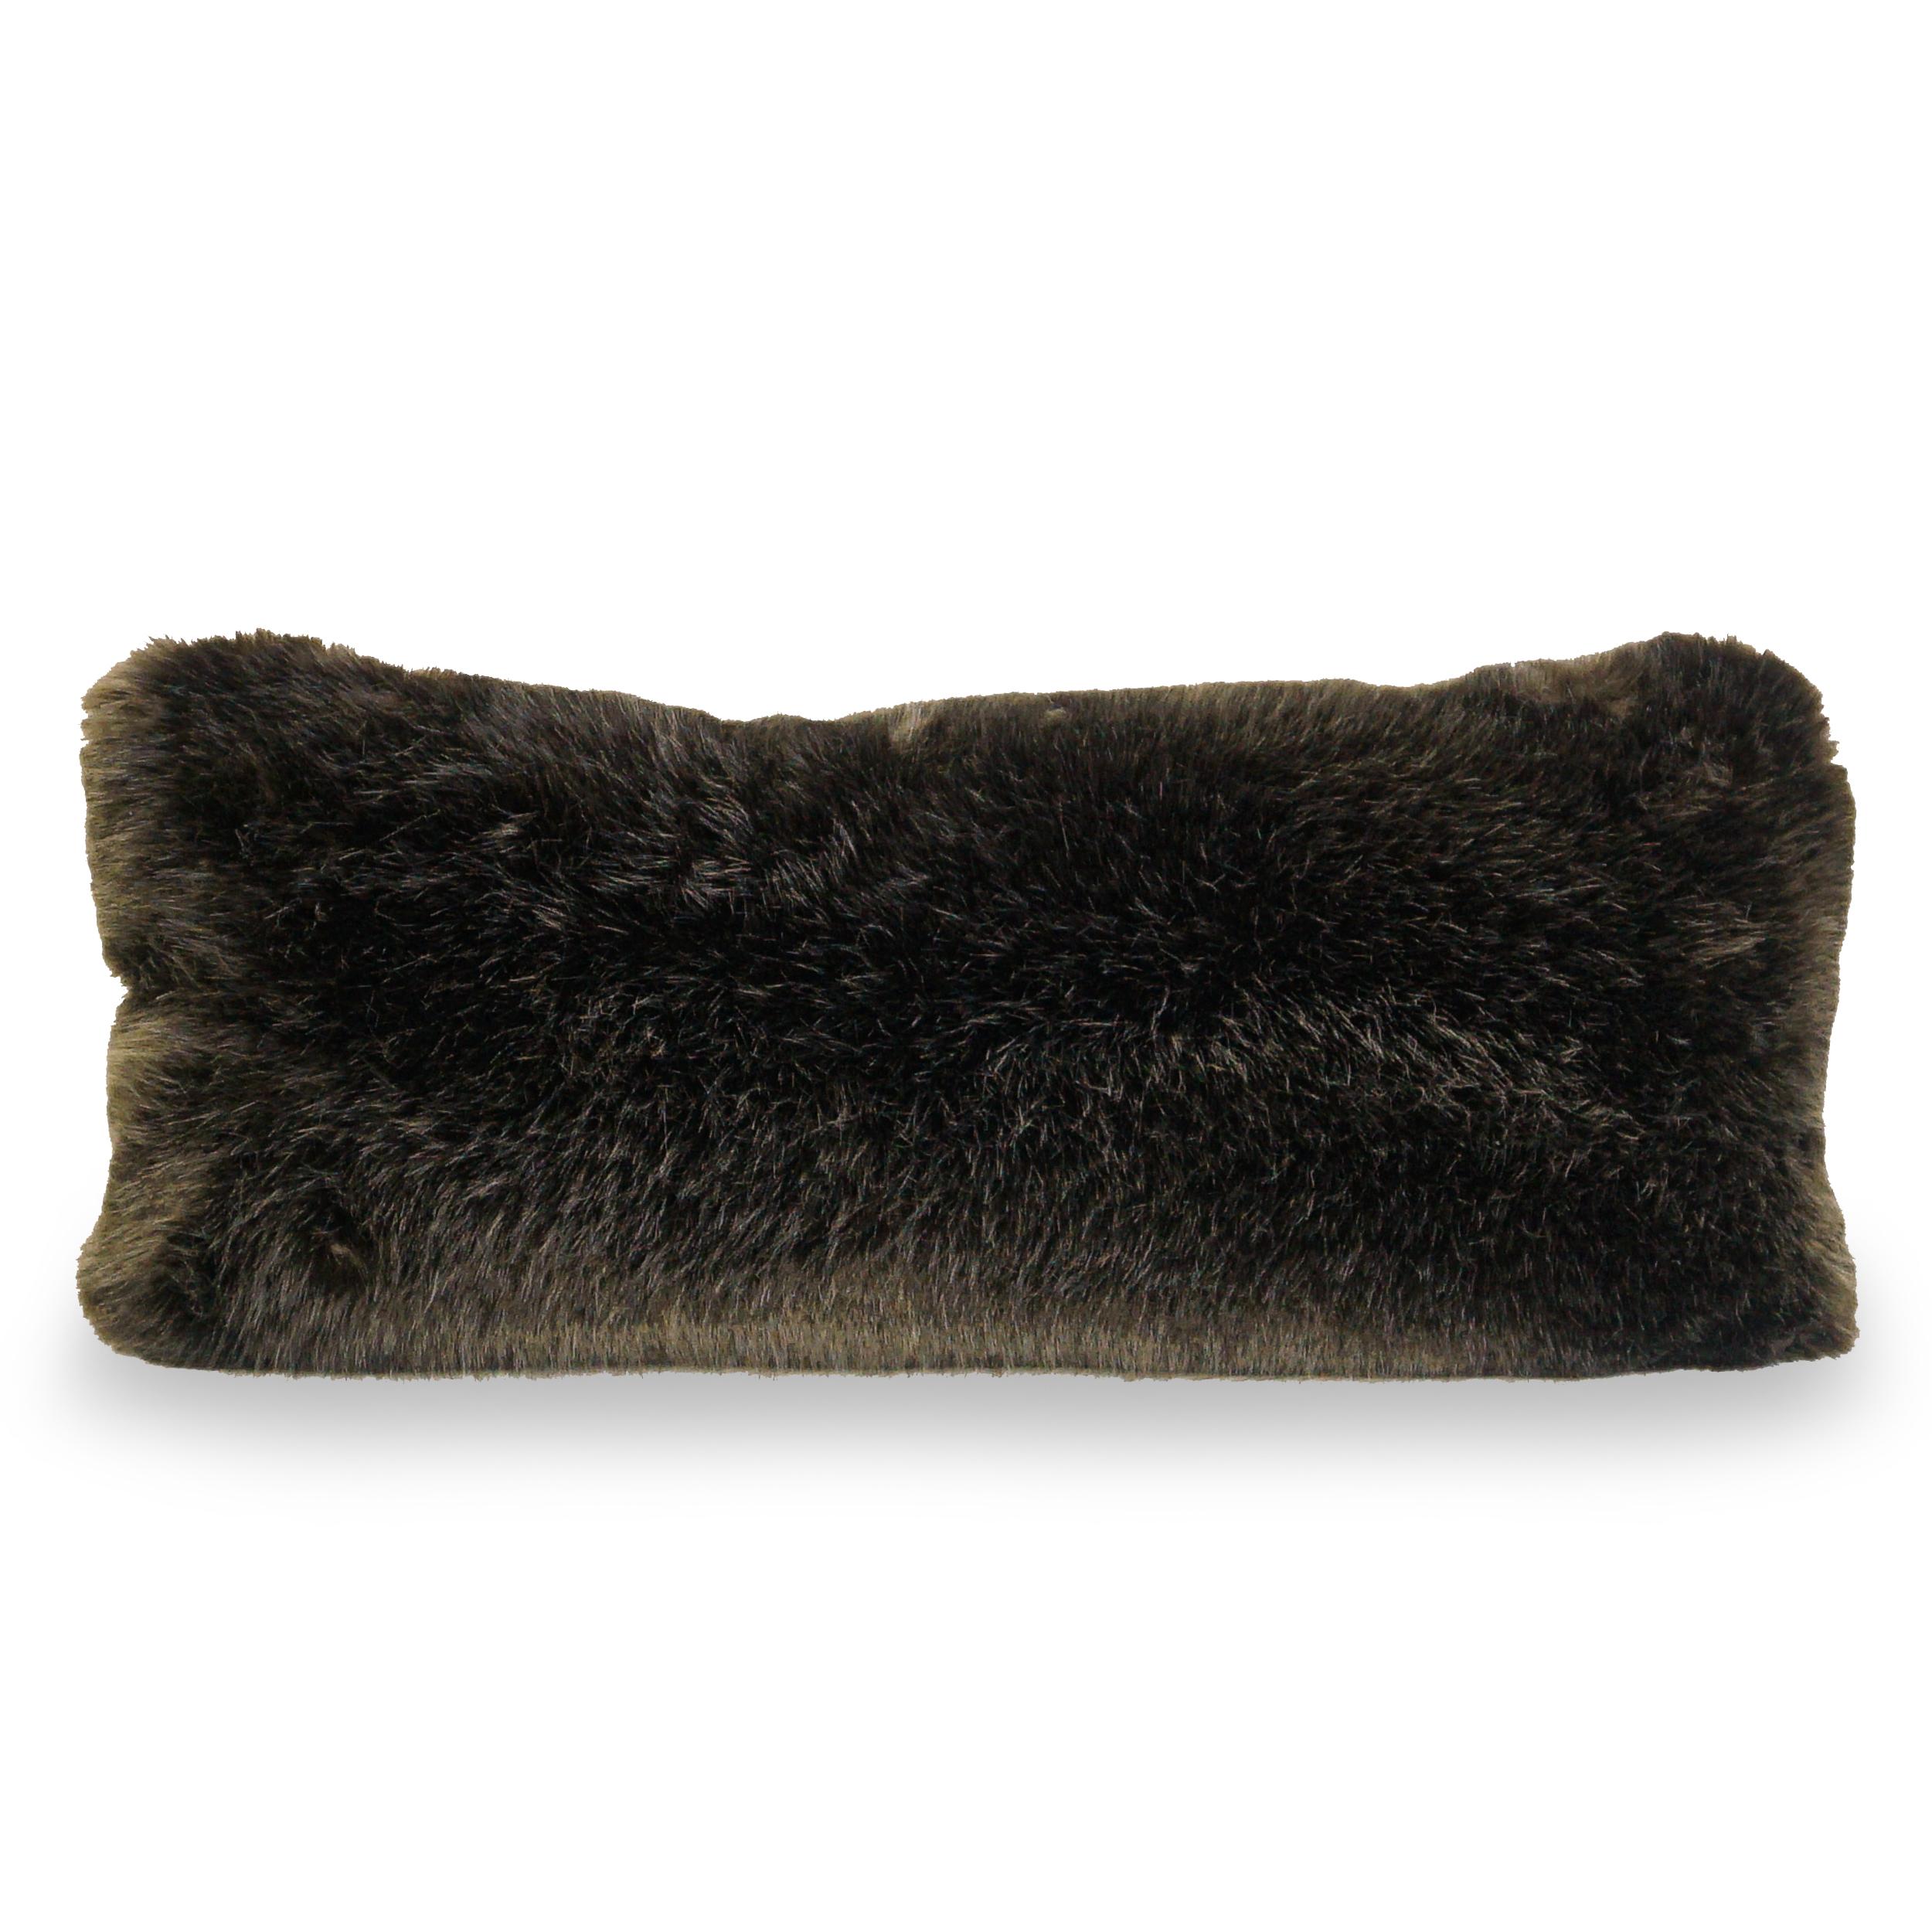 Fantastical Leopard Unicorn Lumbar Pillows with Faux Fur For Sale 5